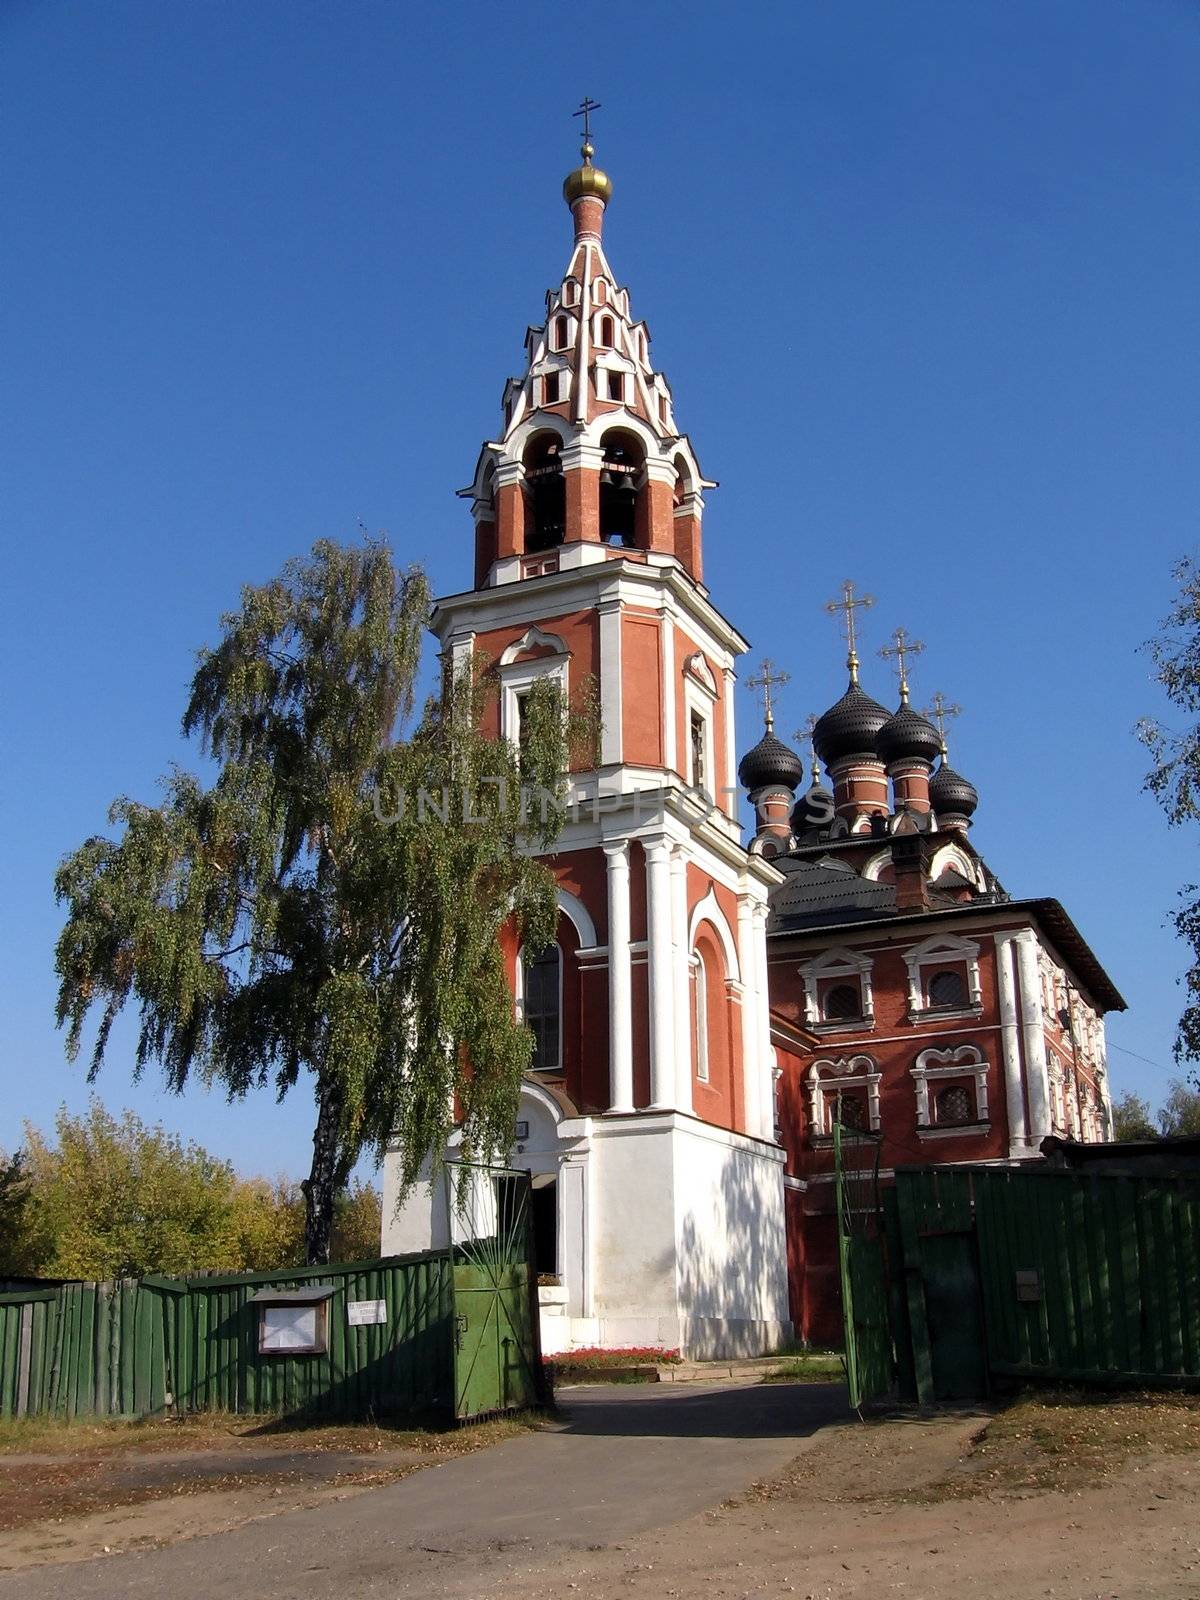 Russian church by tomatto